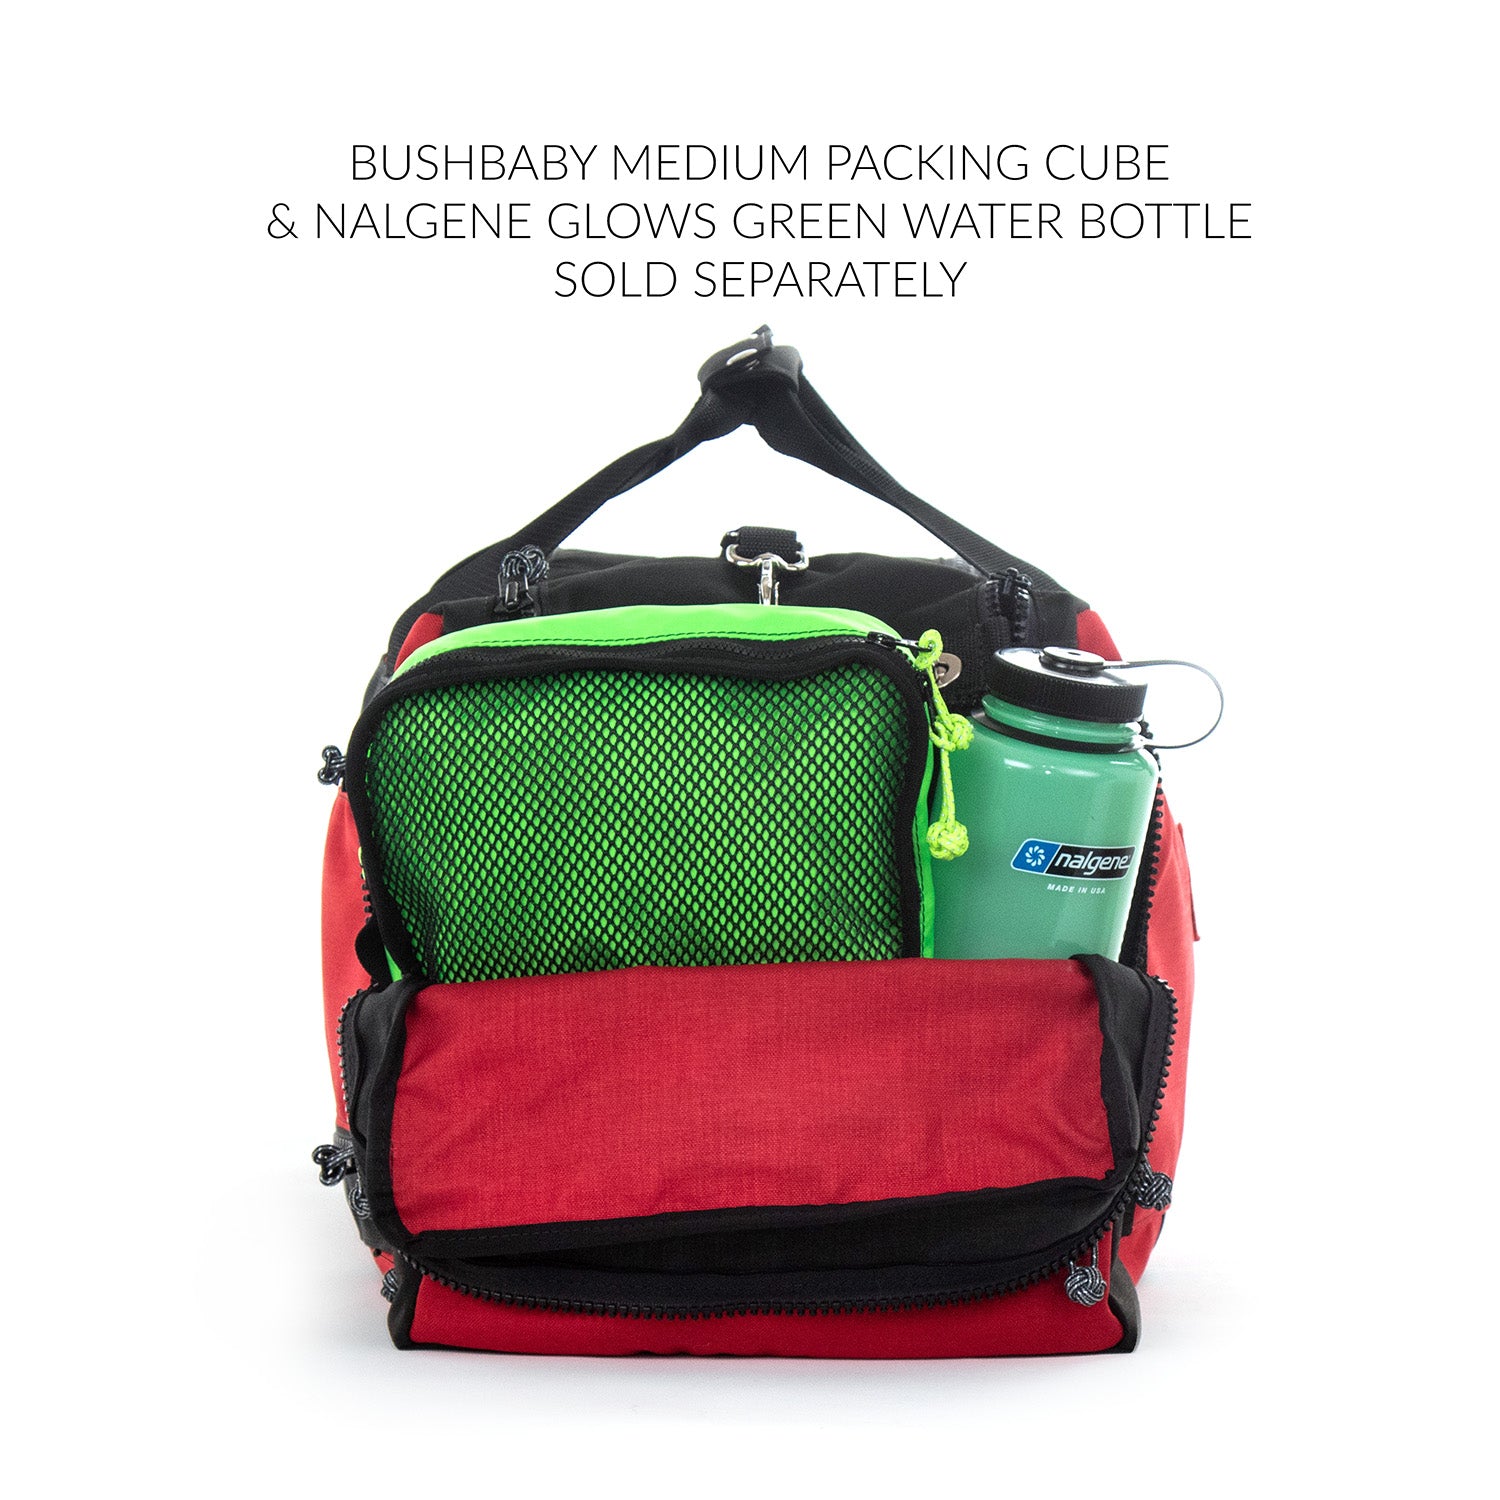 Bushbaby medium packing cube & Nalgene glows green water bottle sold separately. 